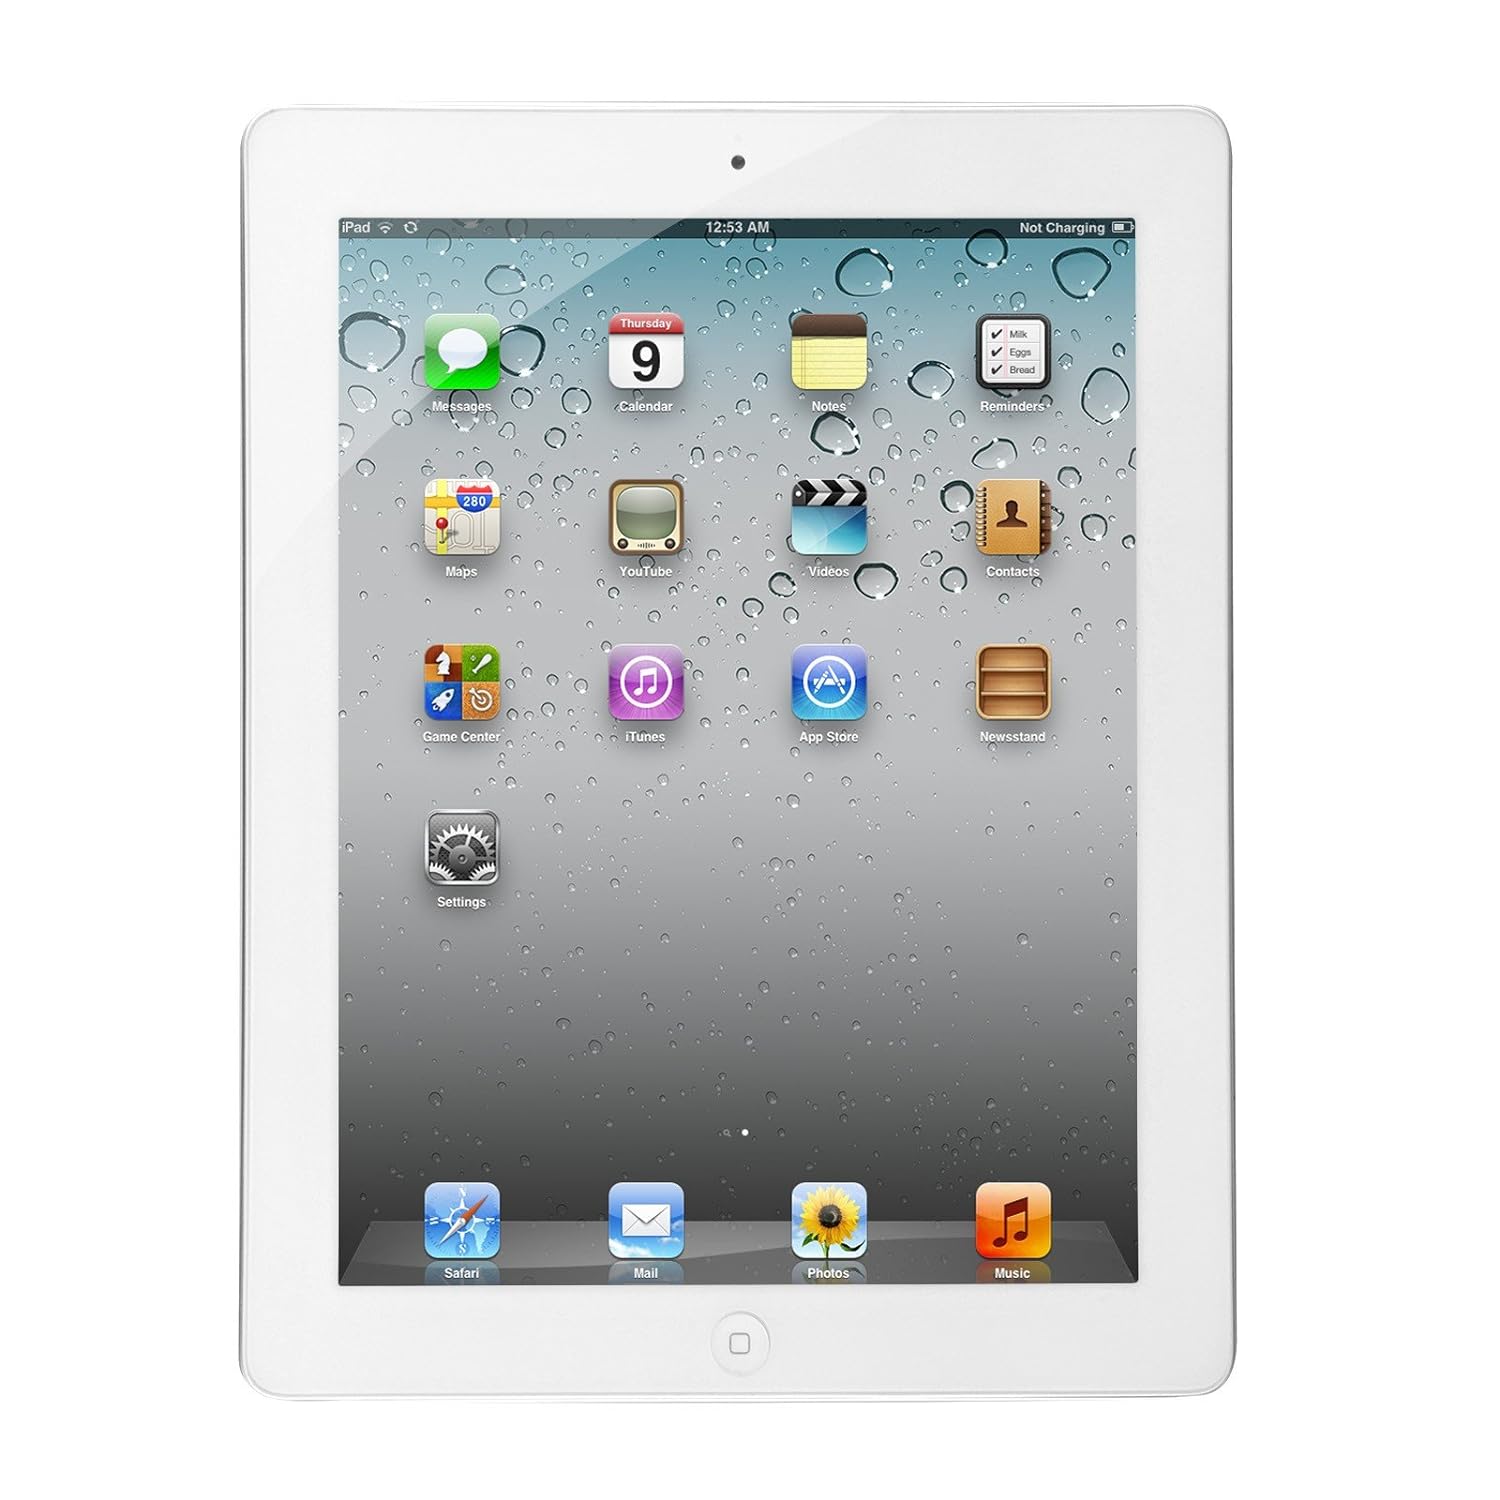 Apple iPad 2 (2012) 16GB